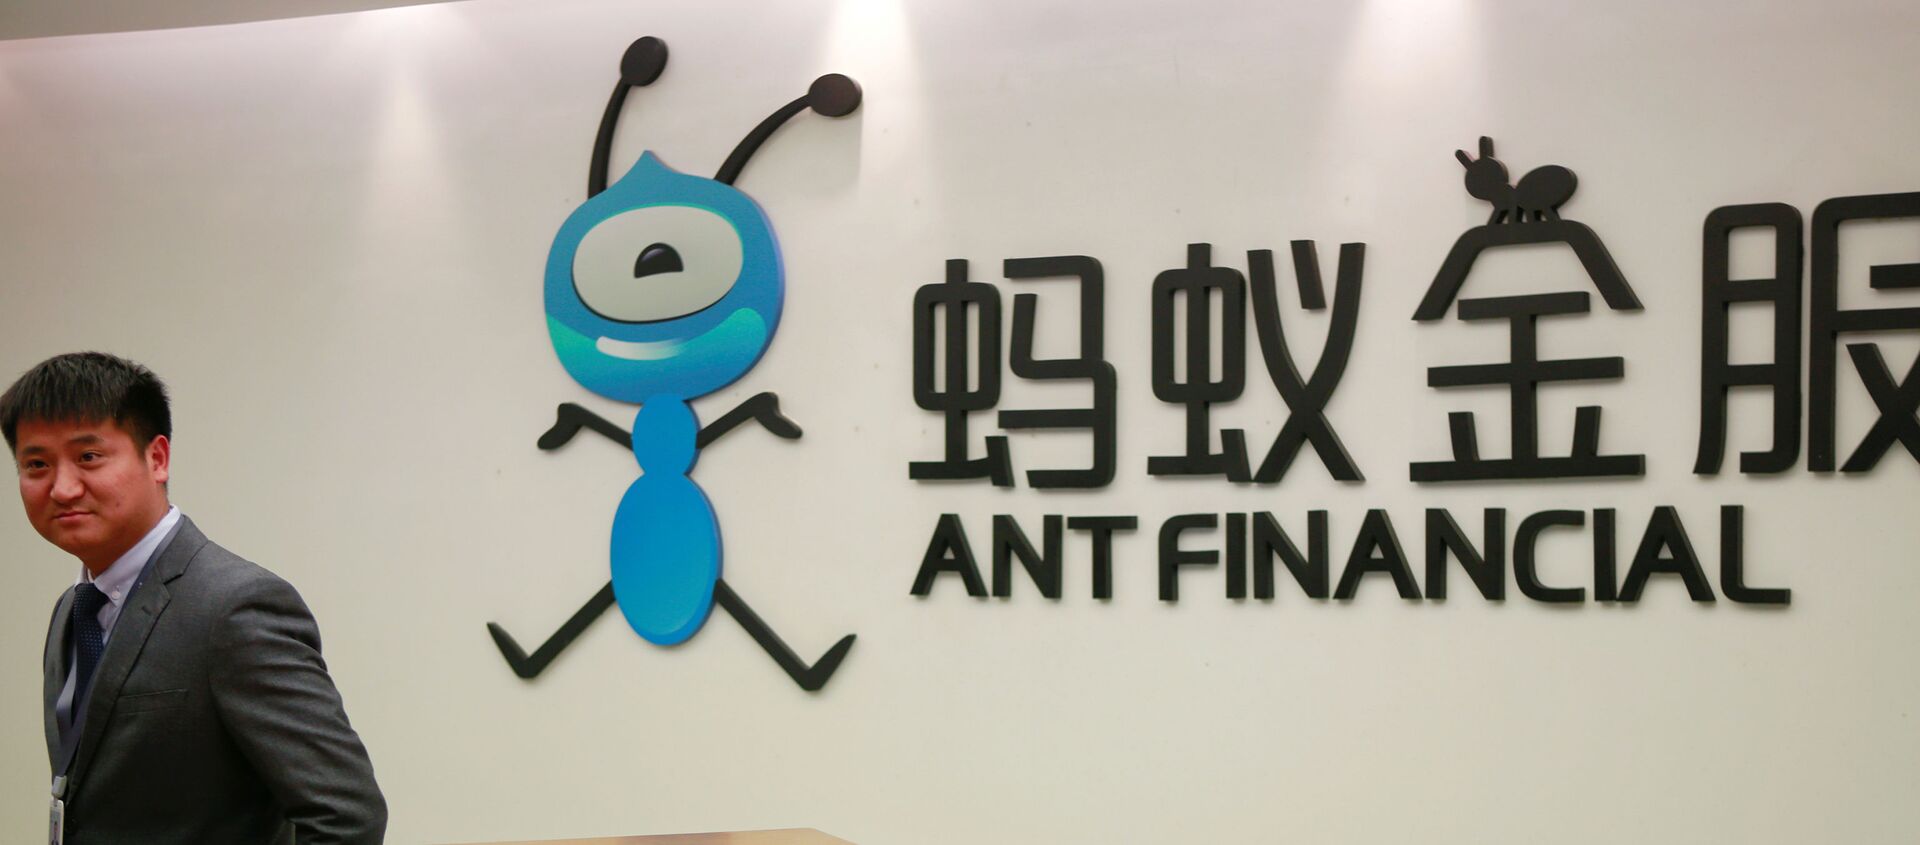 Логотип Ant Financial Services Group, финансового филиала Alibaba, в ее штаб-квартире в Ханчжоу. - 俄罗斯卫星通讯社, 1920, 21.09.2020